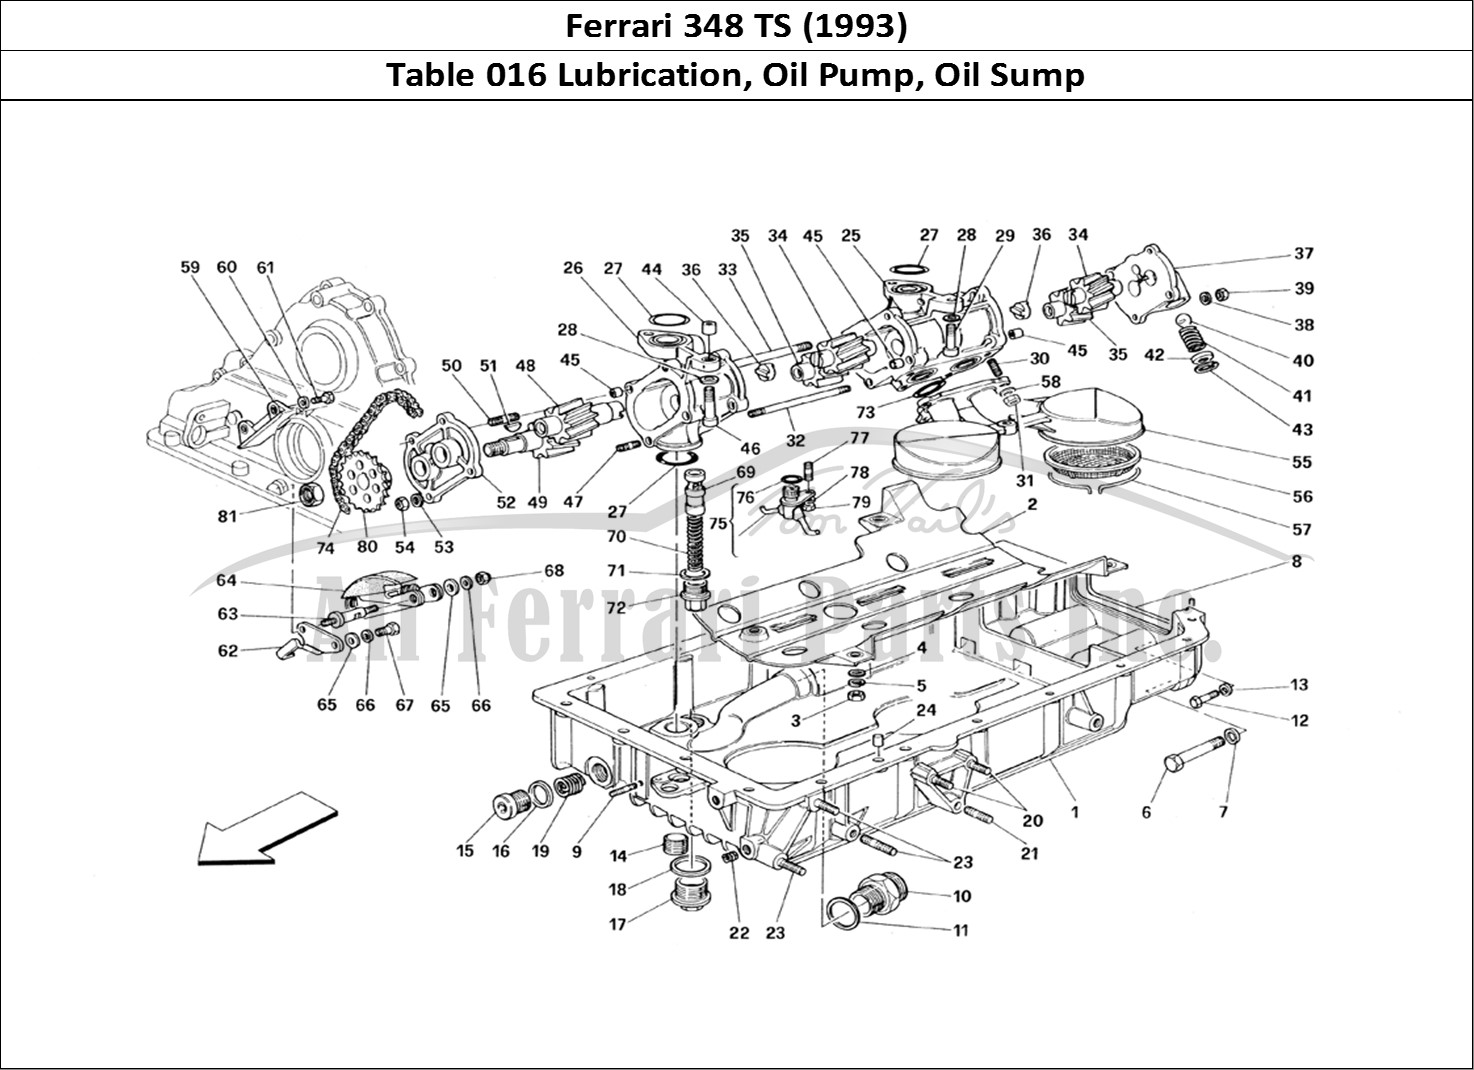 Ferrari Parts Ferrari 348 TB (1993) Page 016 Lubrication - Pumps and O